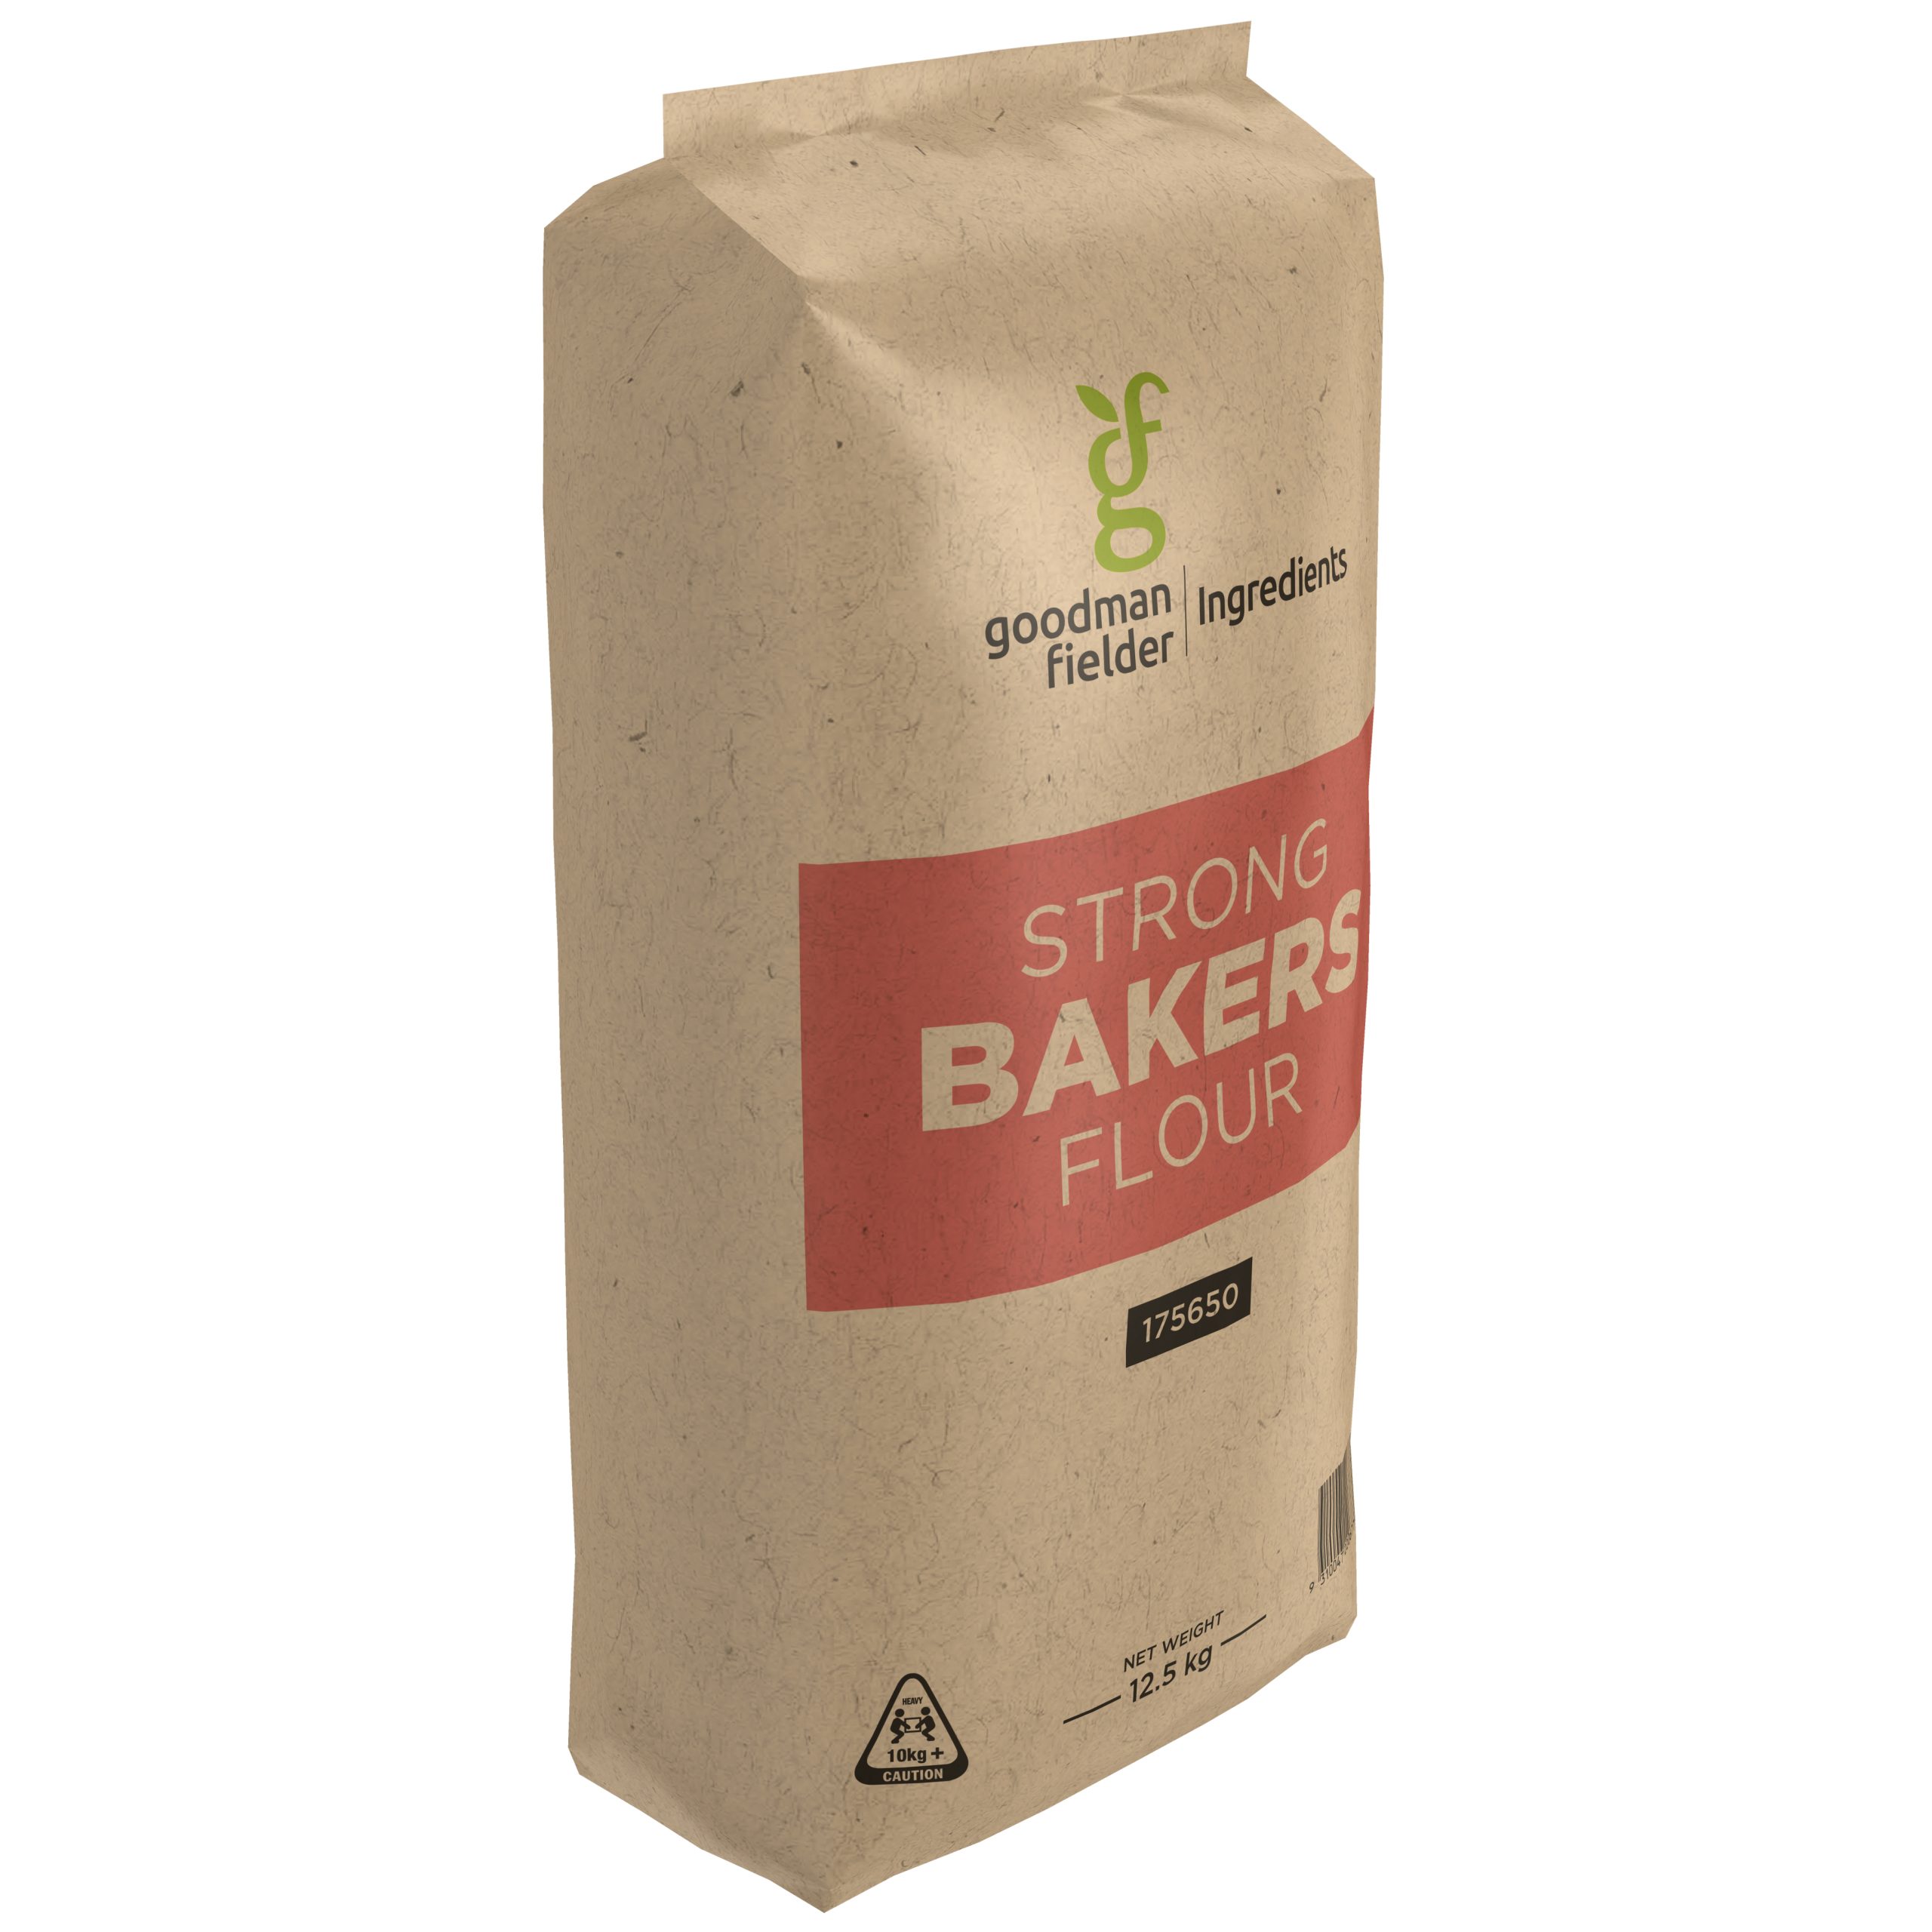 Goodman Fielder Ingredients Strong Bakers Flour 12.5kg product photo